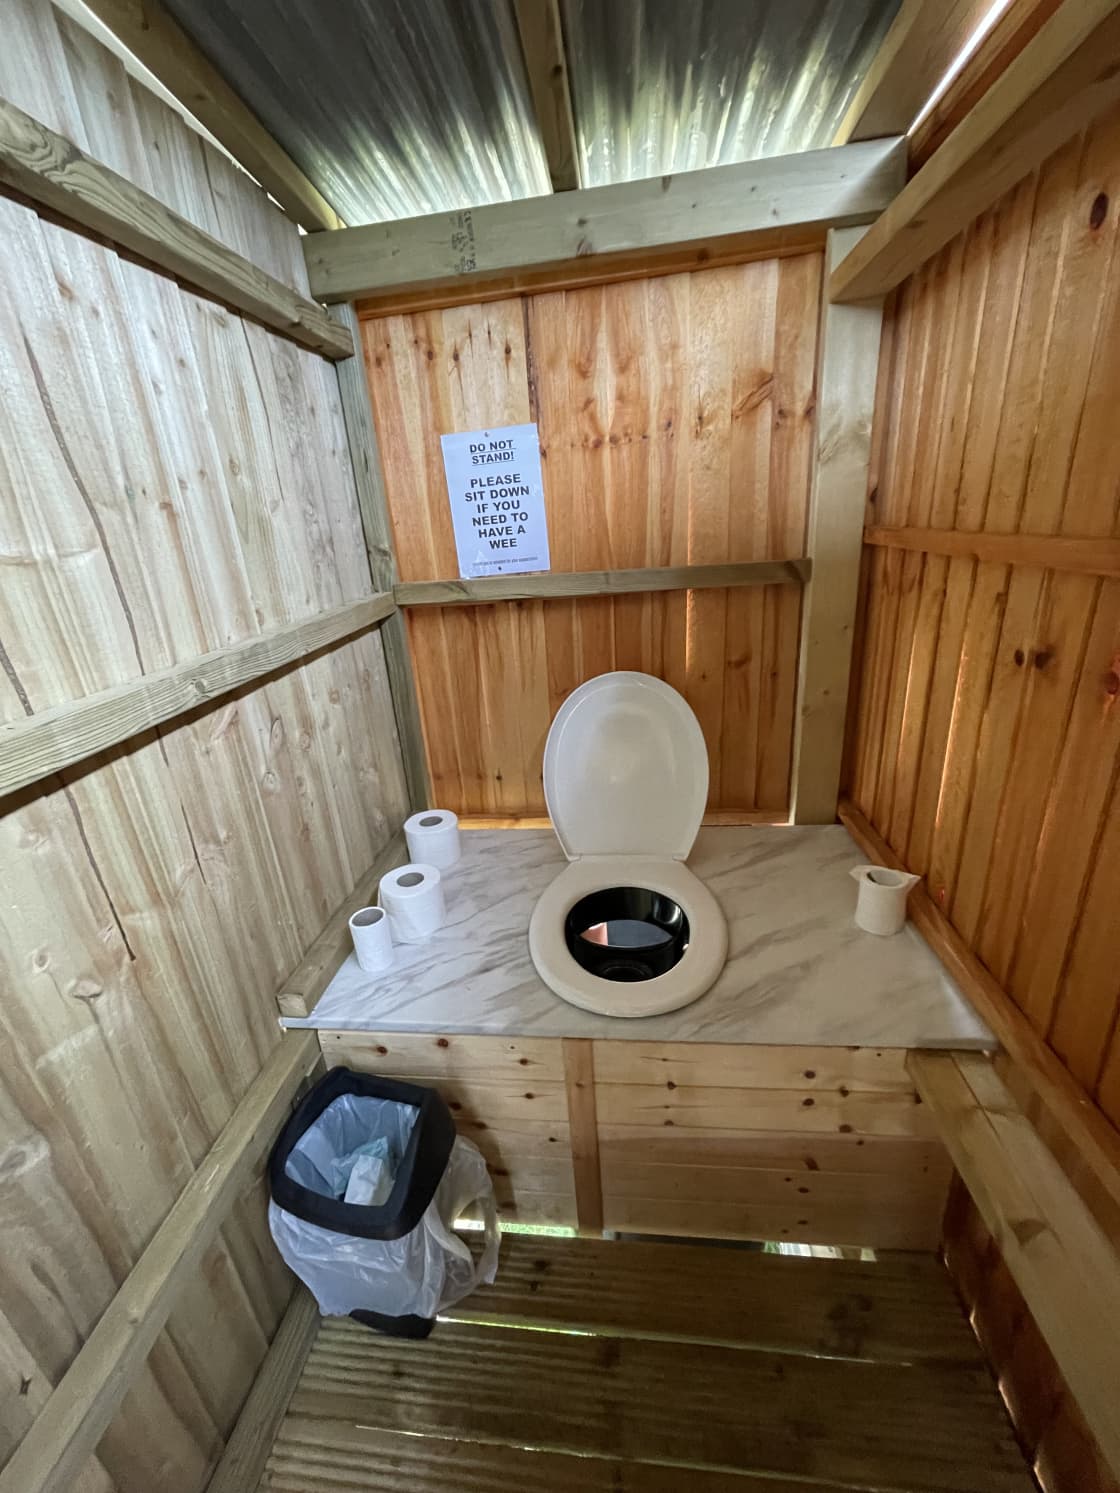 Compost toilets